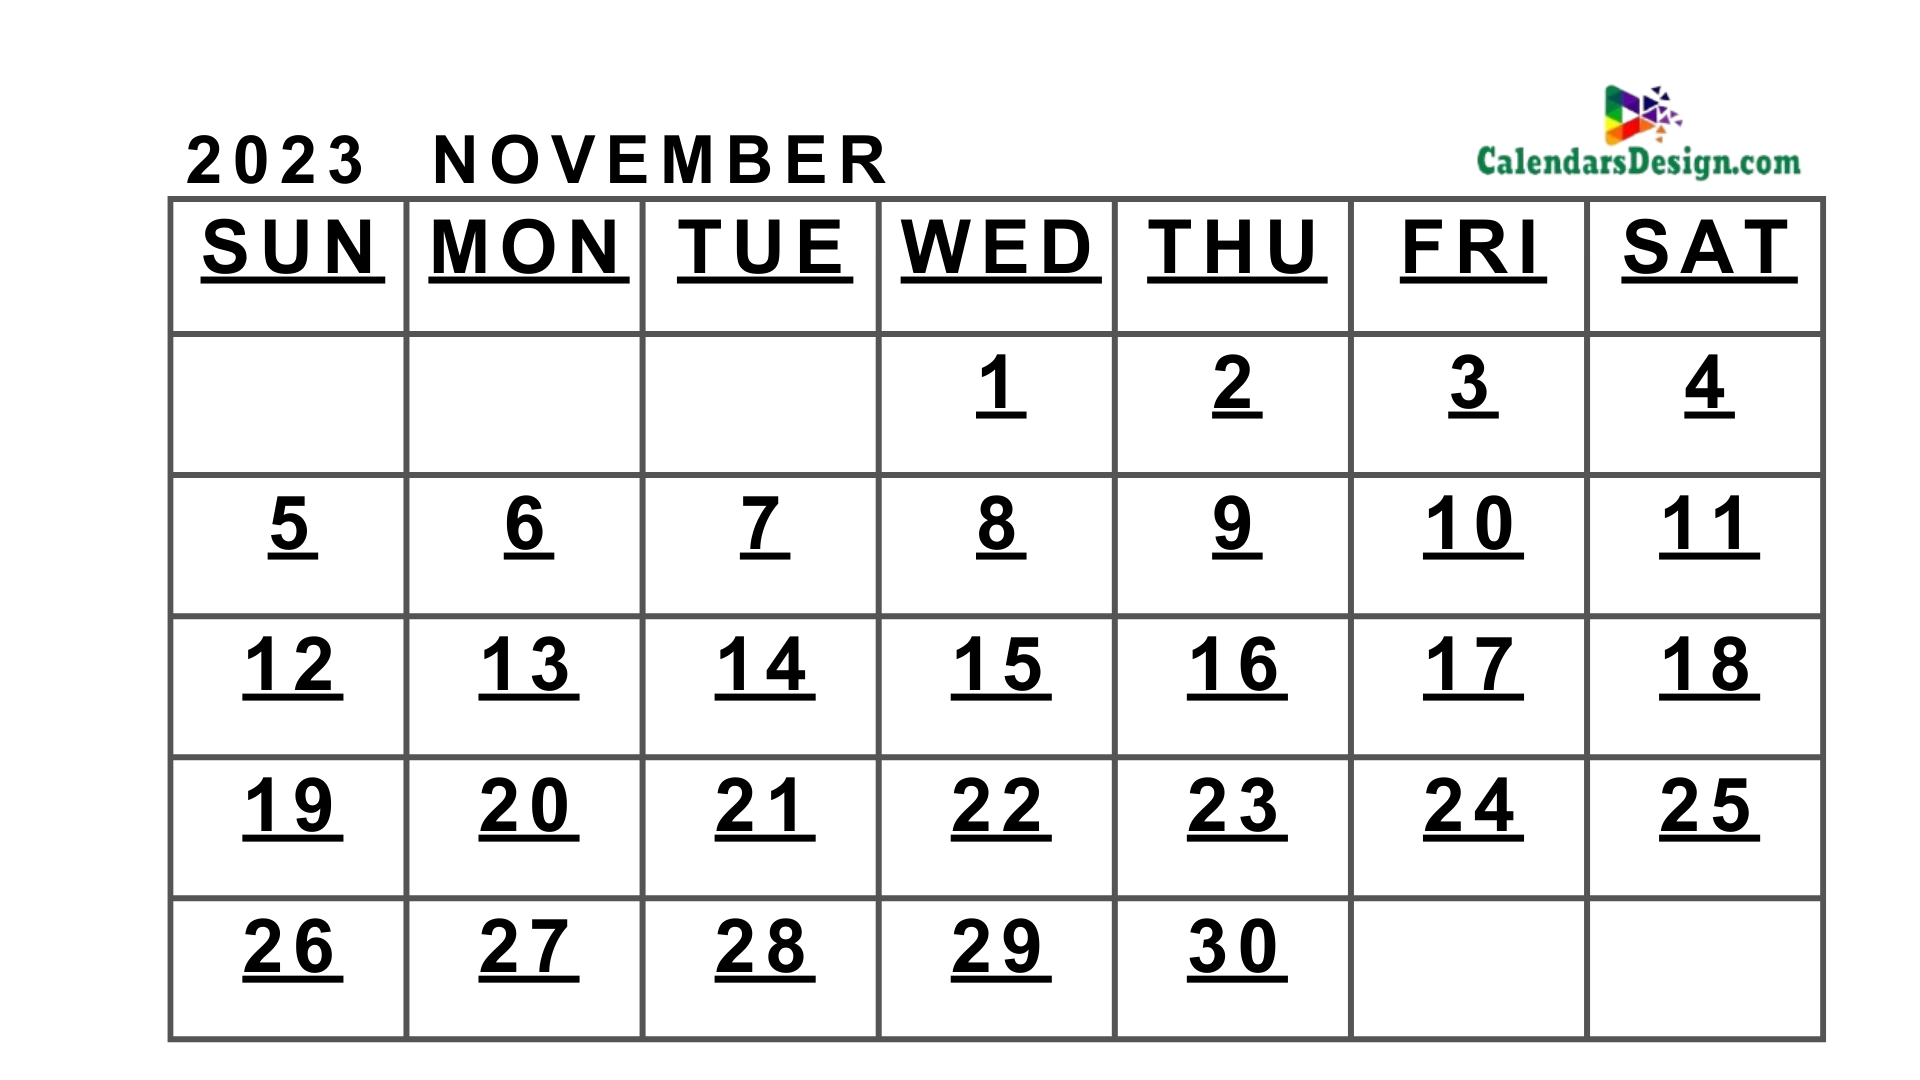 November 2023 Blank Calendar